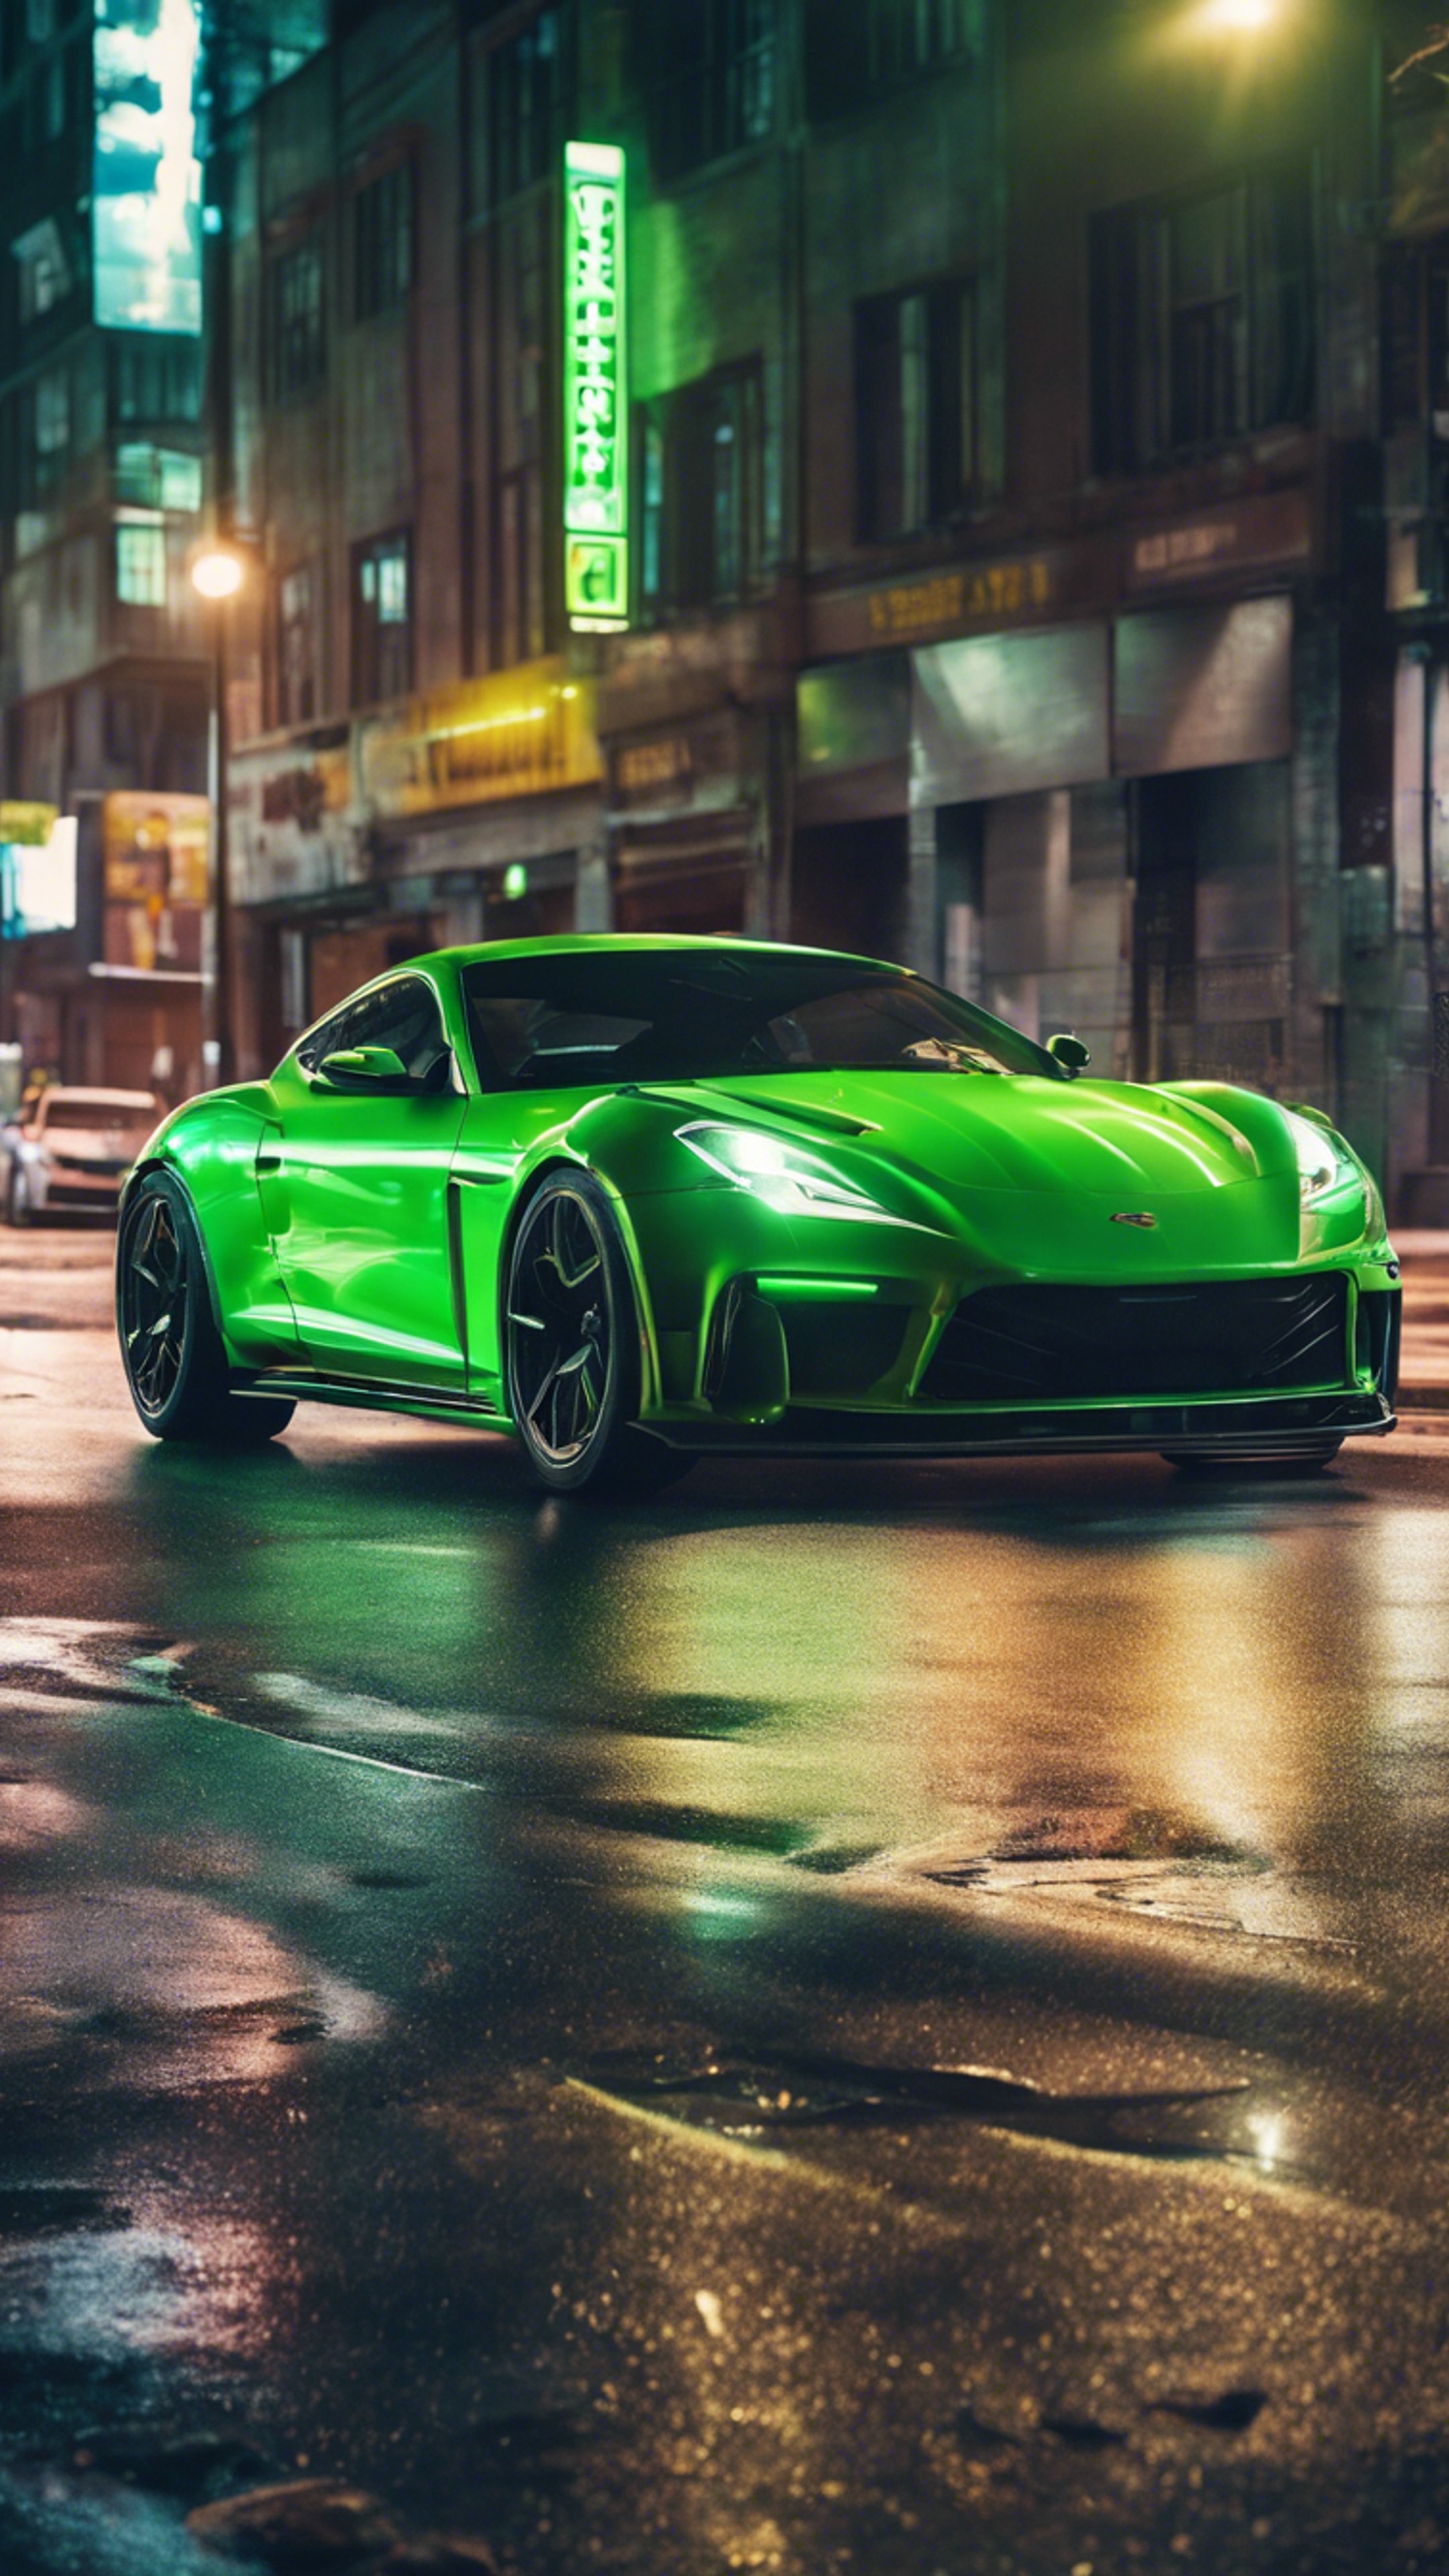 A cool neon green sports car racing down a city street at night. Tapet[ff2aa681813144c0b5f6]